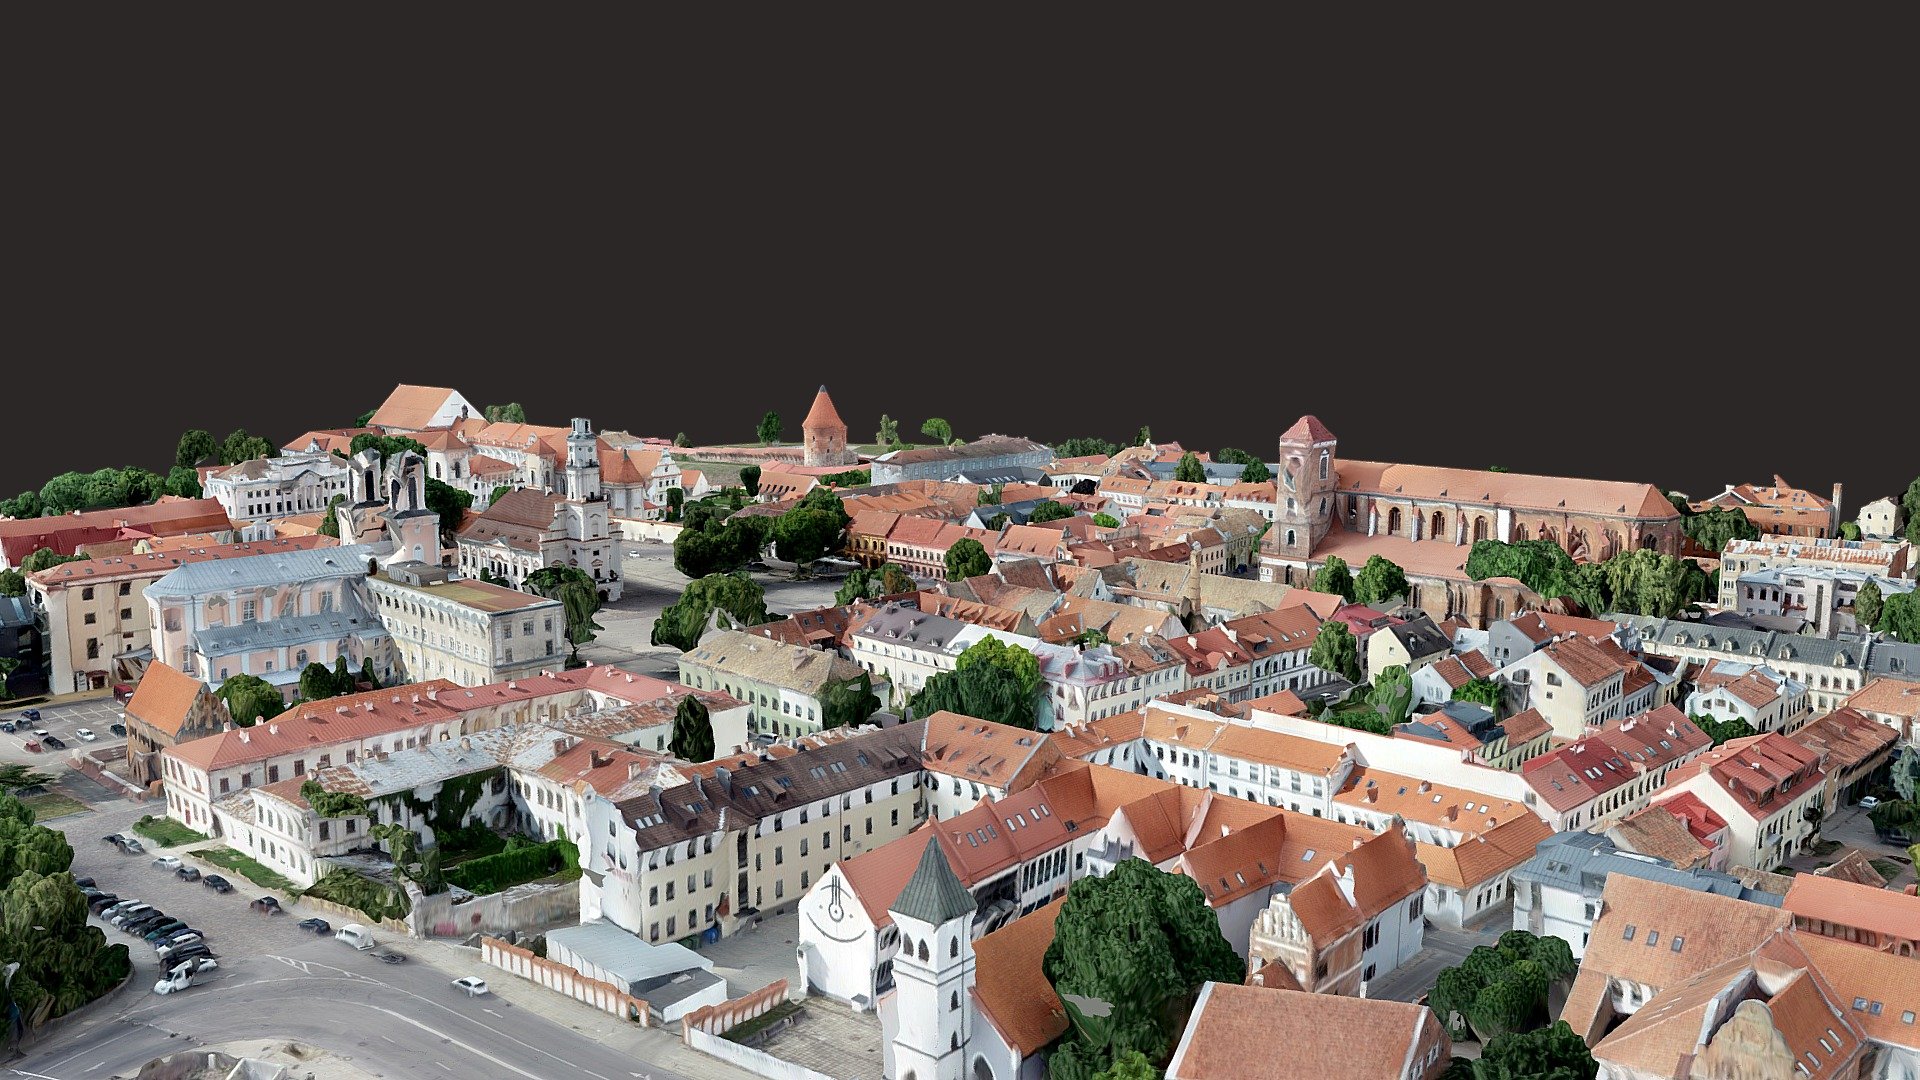 Kaunas old town - Kaunas old town - 3D model by Saulius.Zaura 3d model